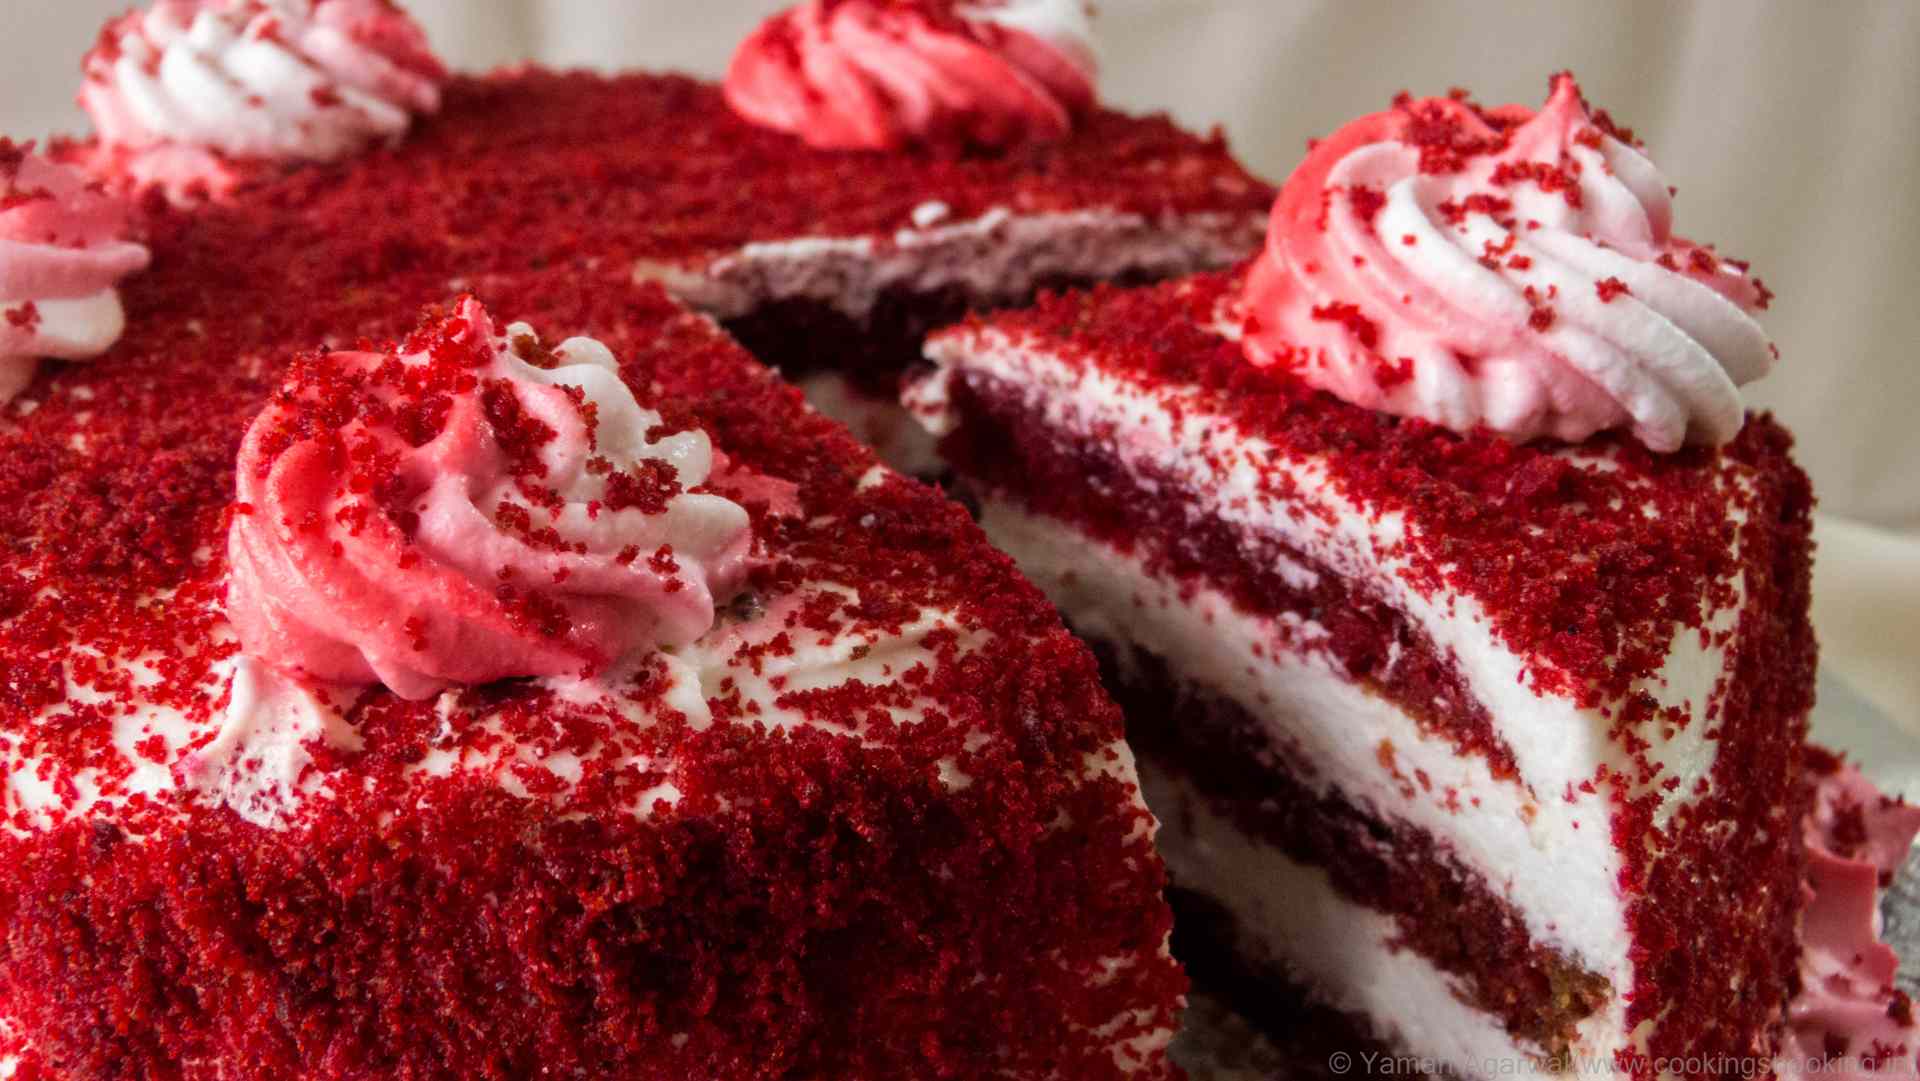 Red Velvet Cake Recipe / Cooker Cake / Eggless Baking Without Oven